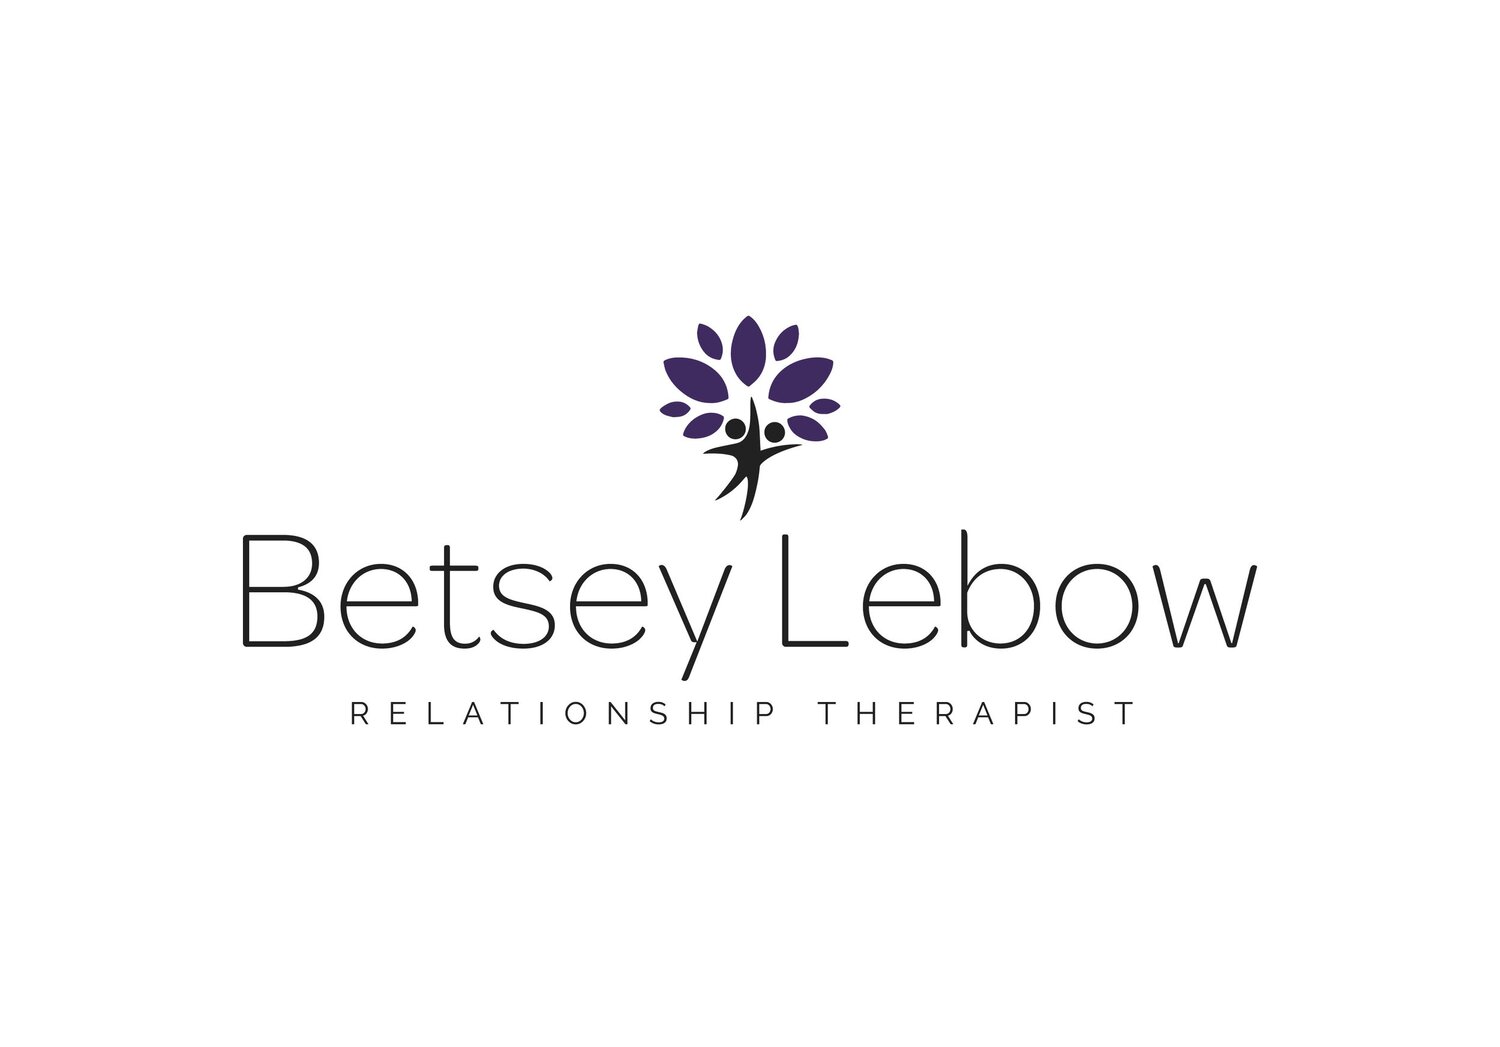 Betsey Lebow, LMFT